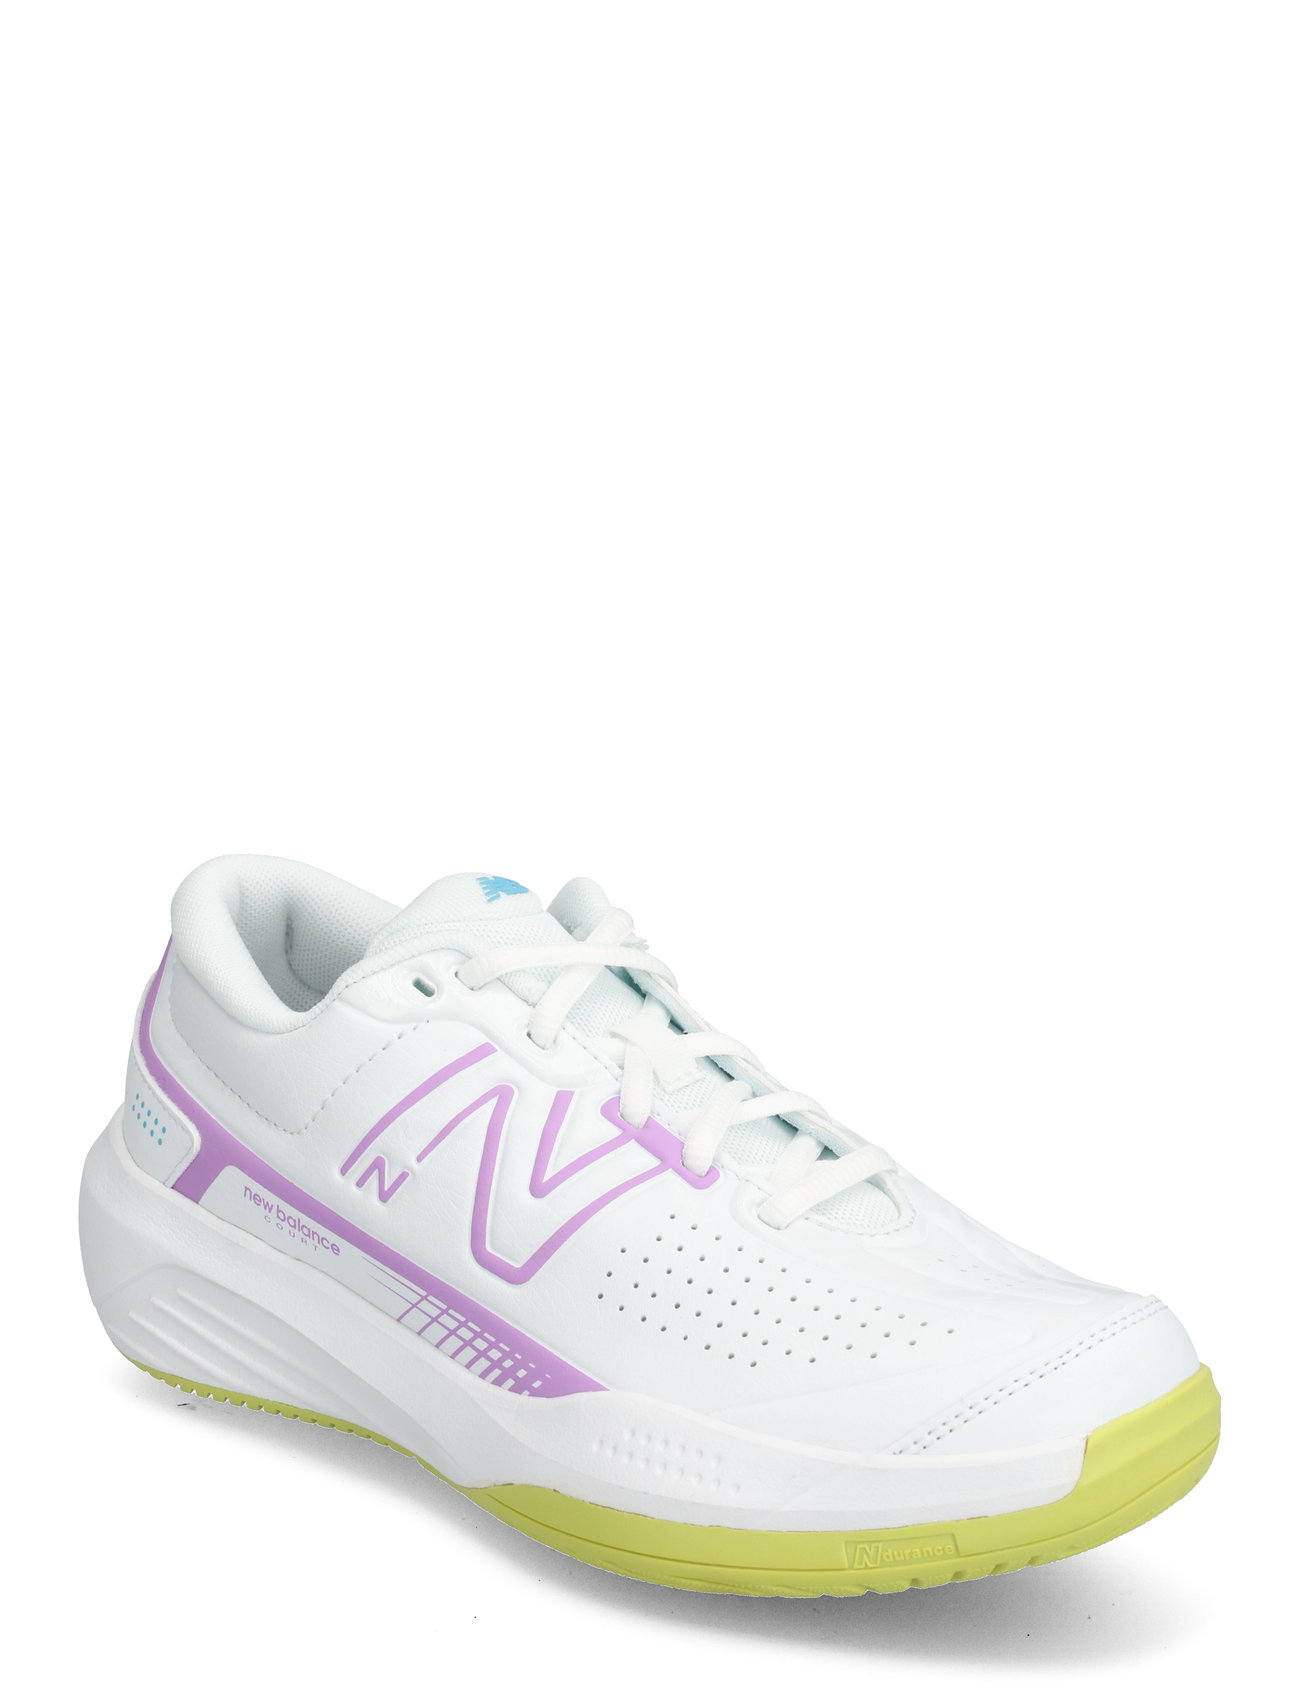 New Balance 696V5 Sport Sport Shoes Racketsports Shoes Tennis Shoes White New Balance